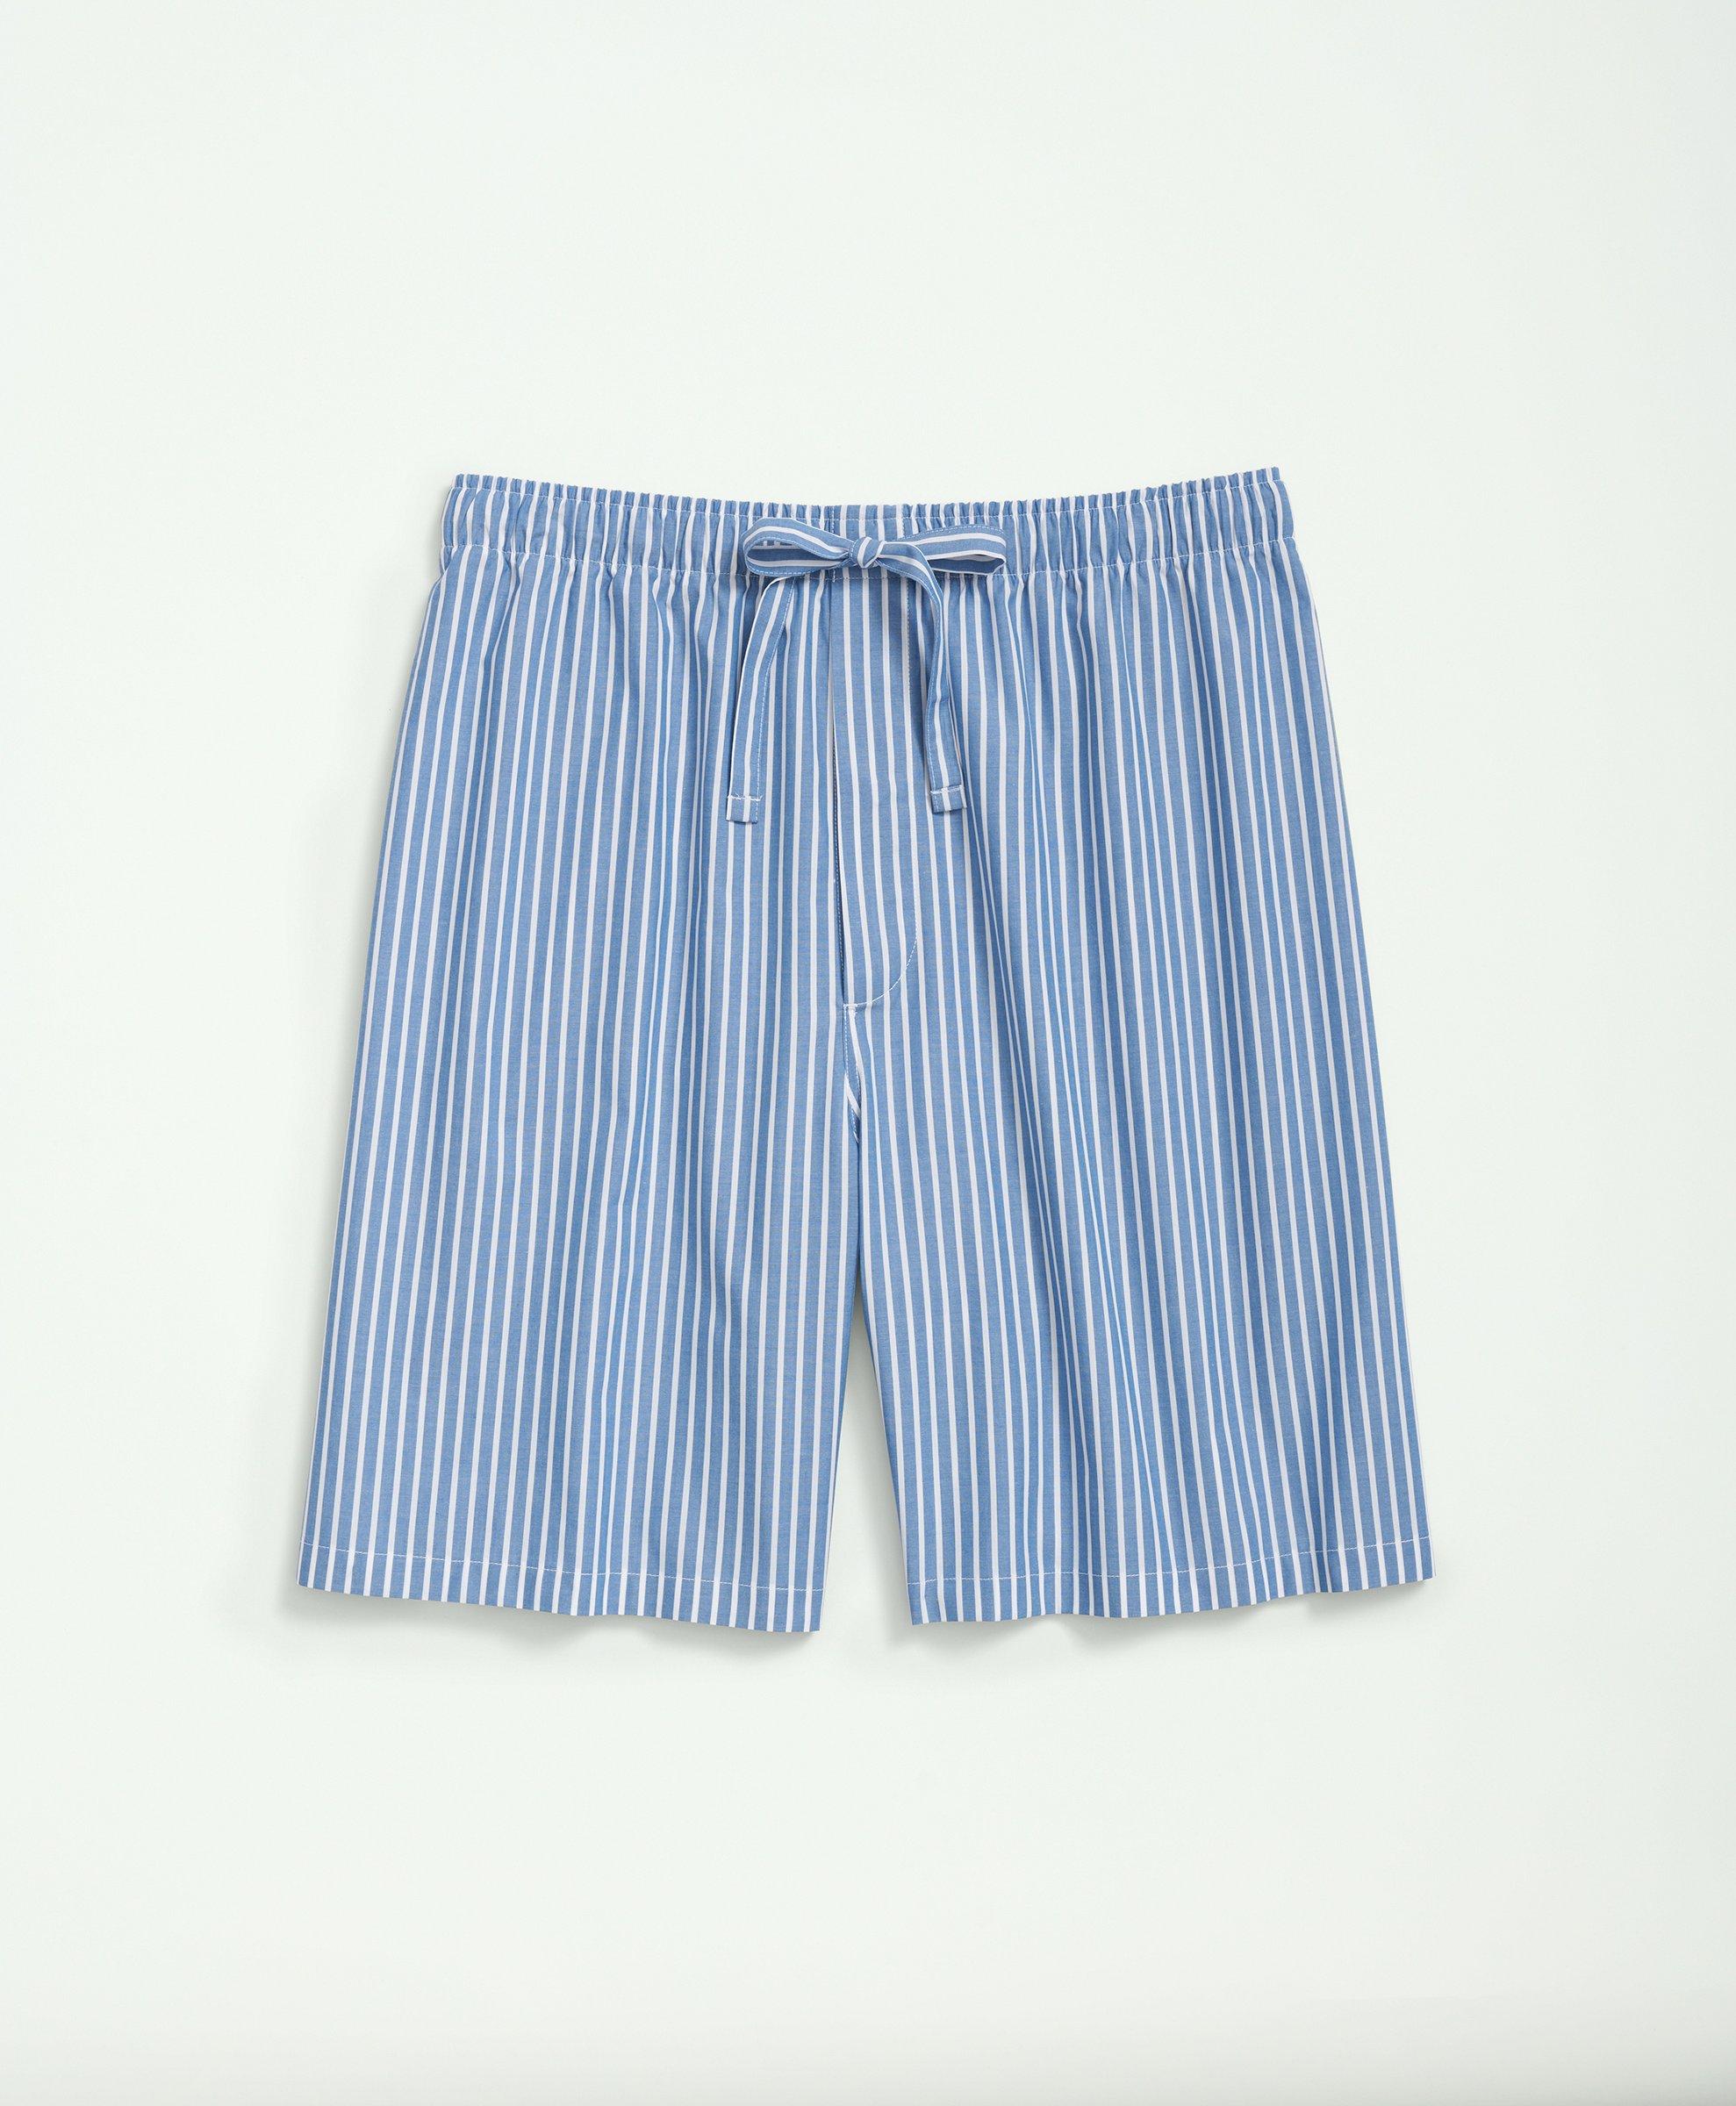 Cotton Broadcloth Bengal Striped Short Pajamas